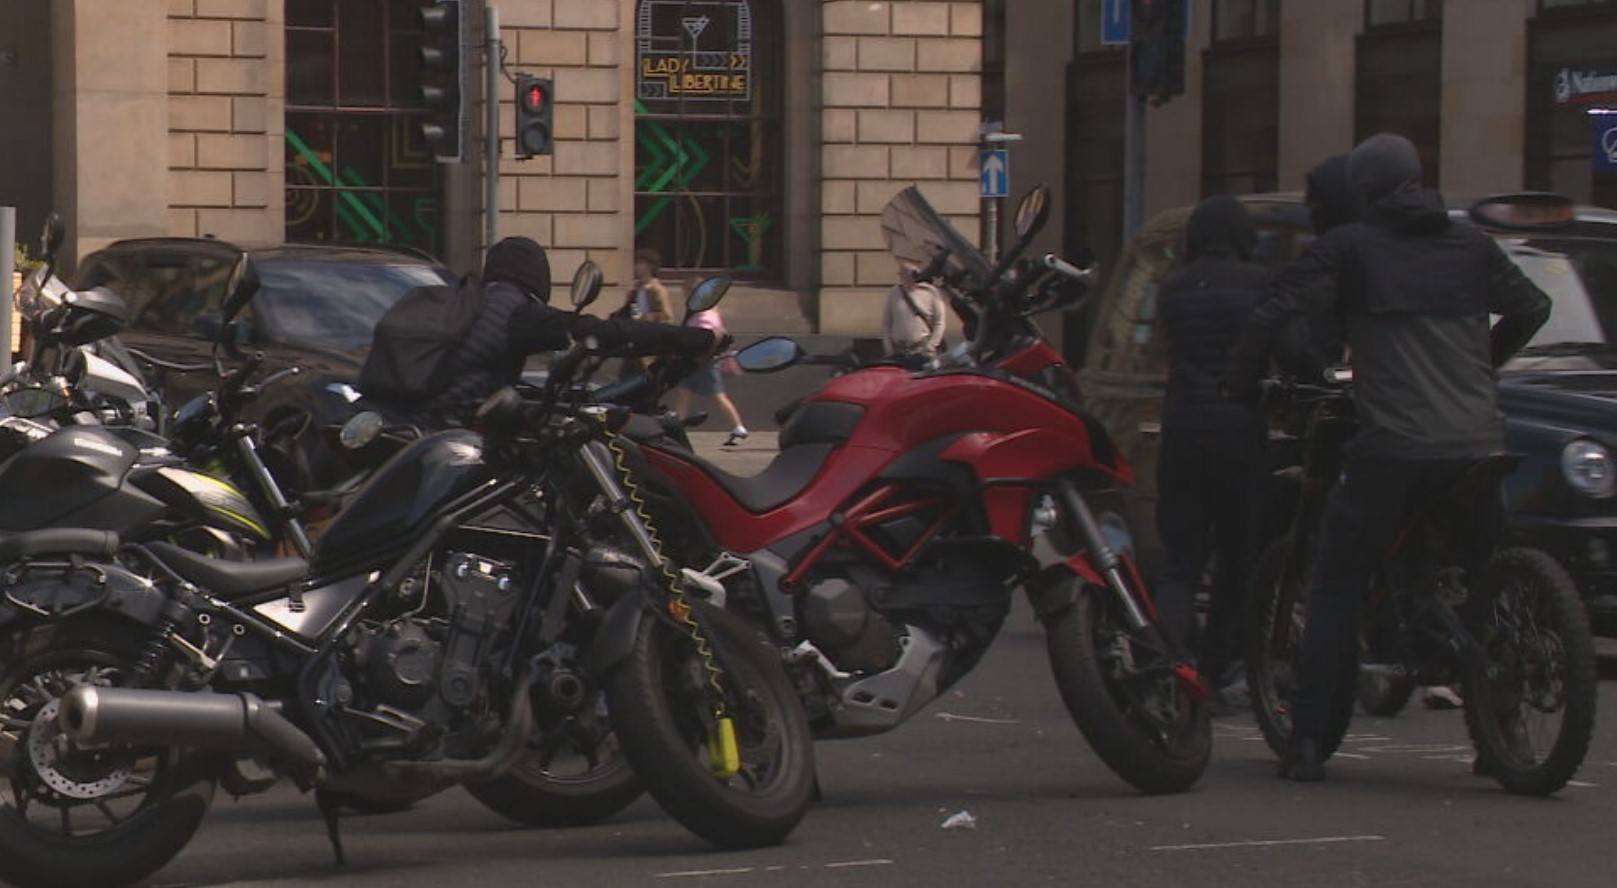 Motorbike stolen on St Andrew's Square in Edinburgh